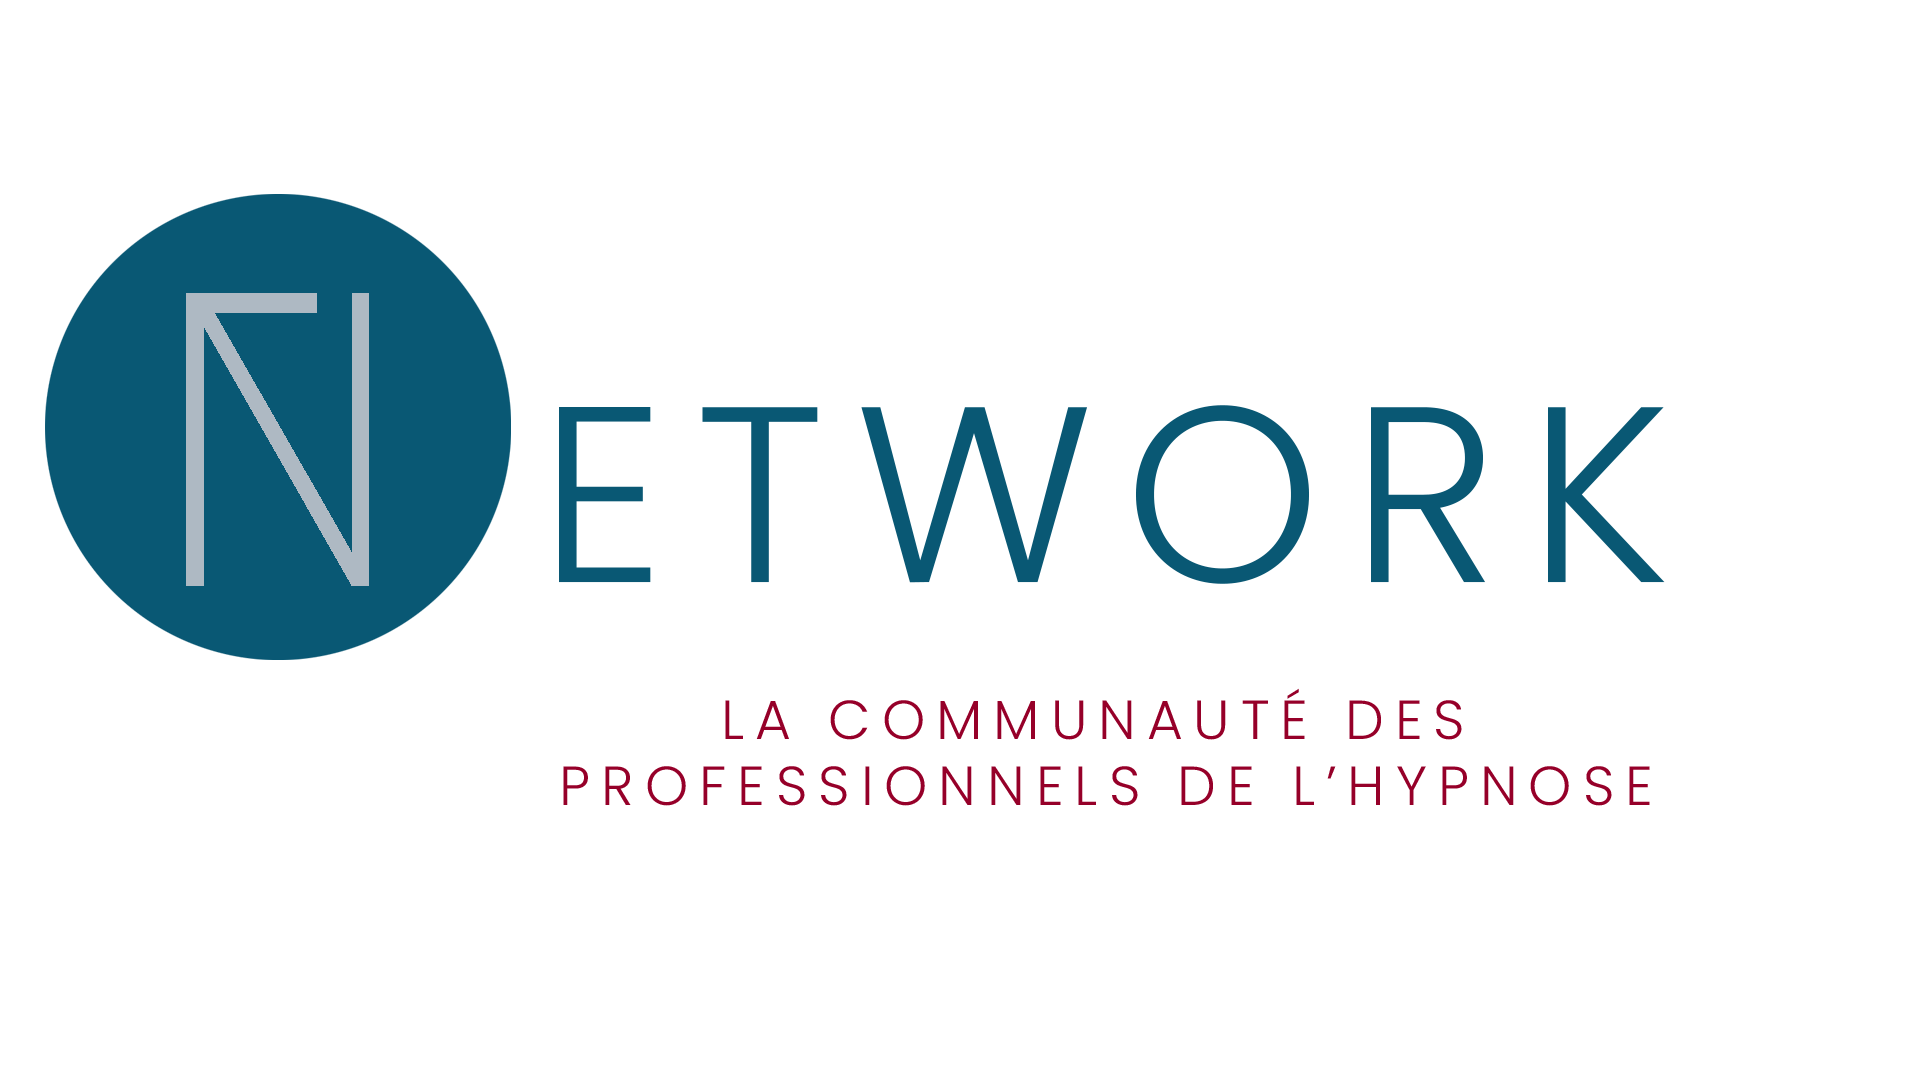 Logo Network